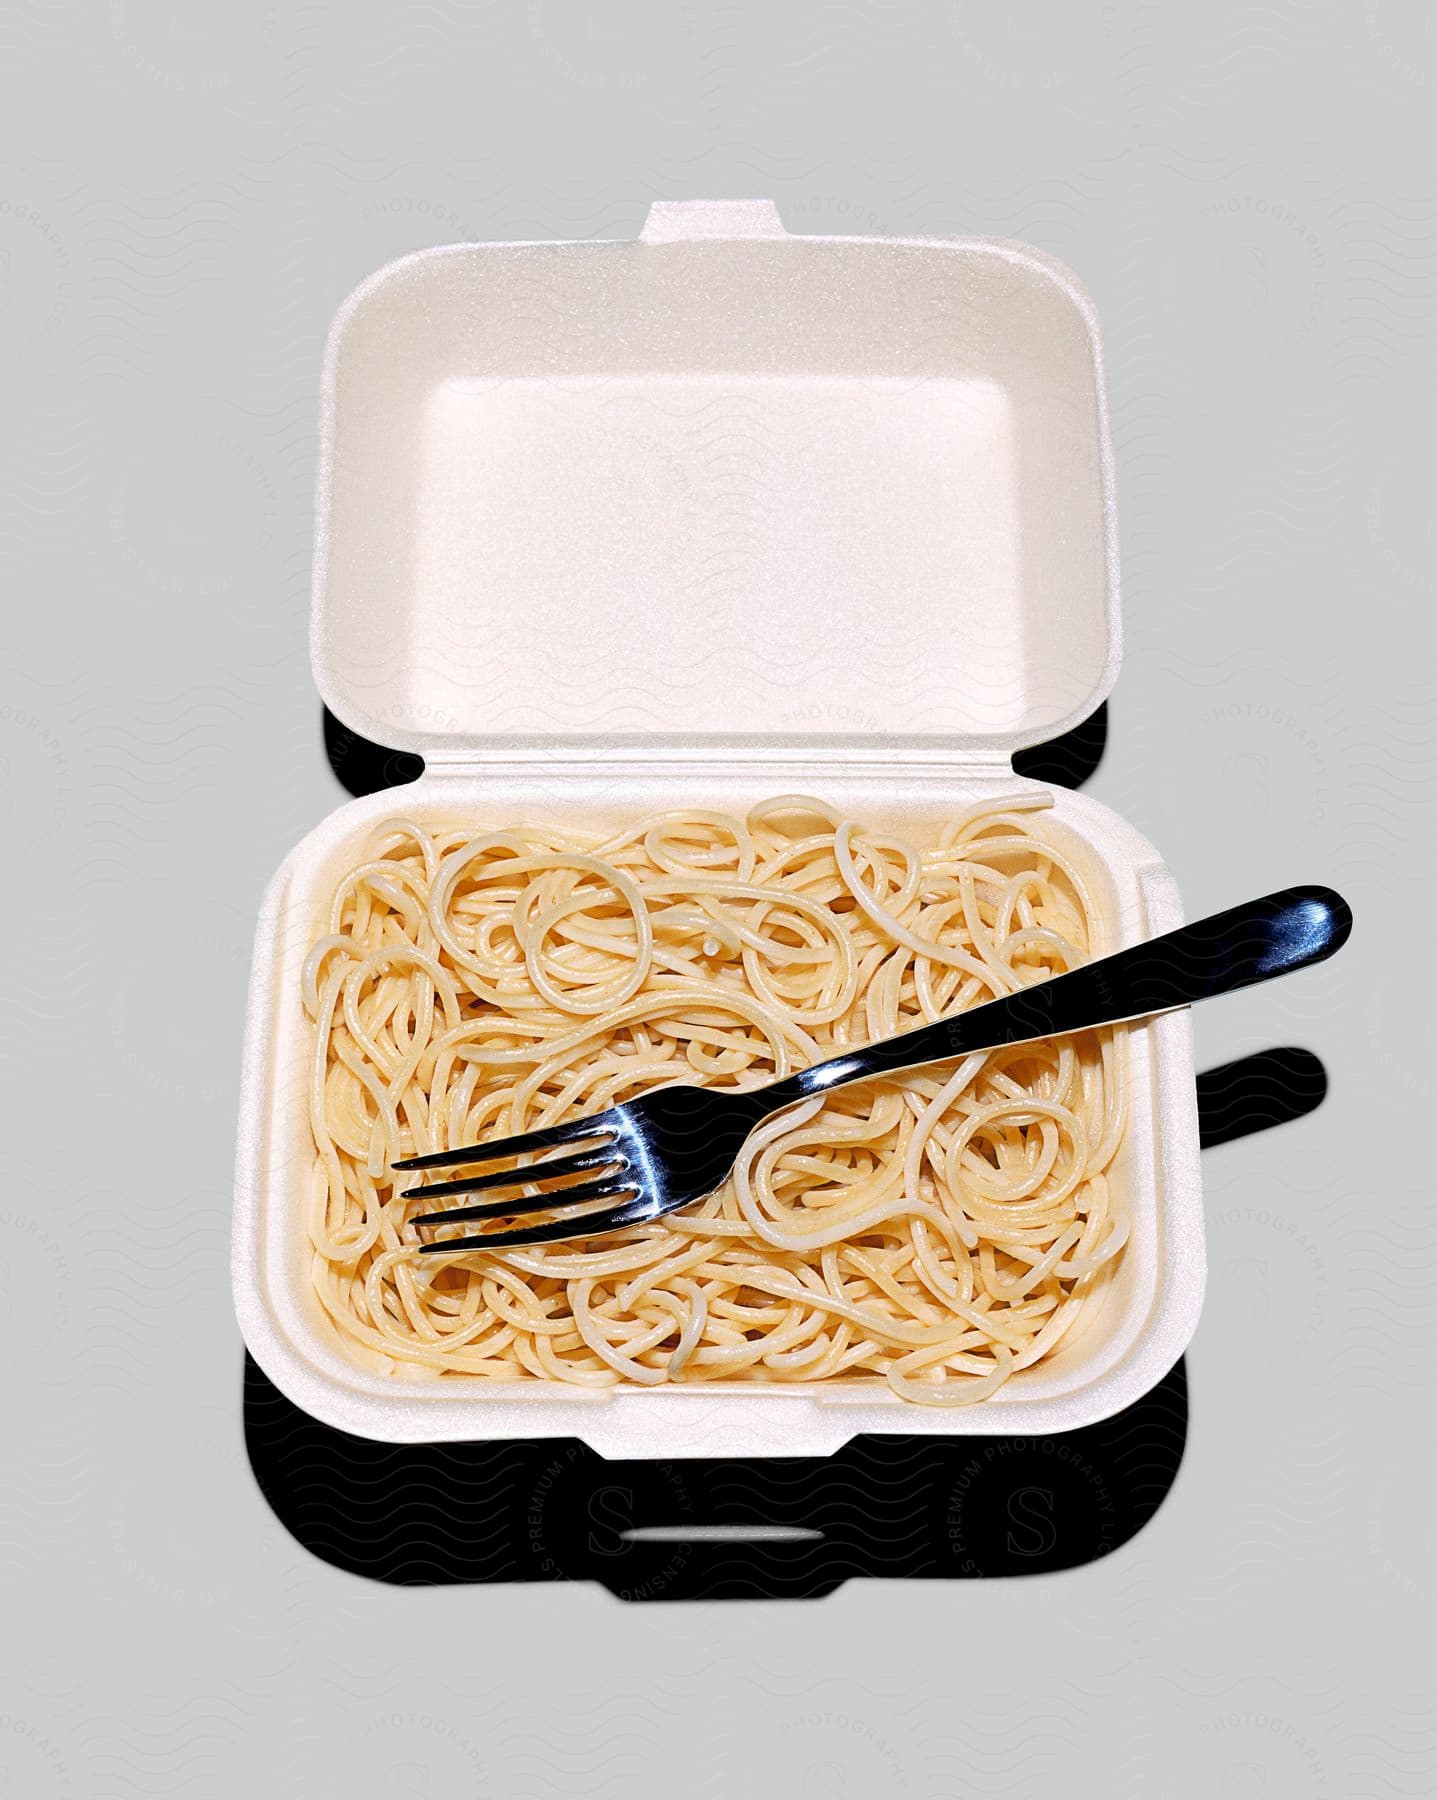 A take out box of pasta with a fork in it on a grey background